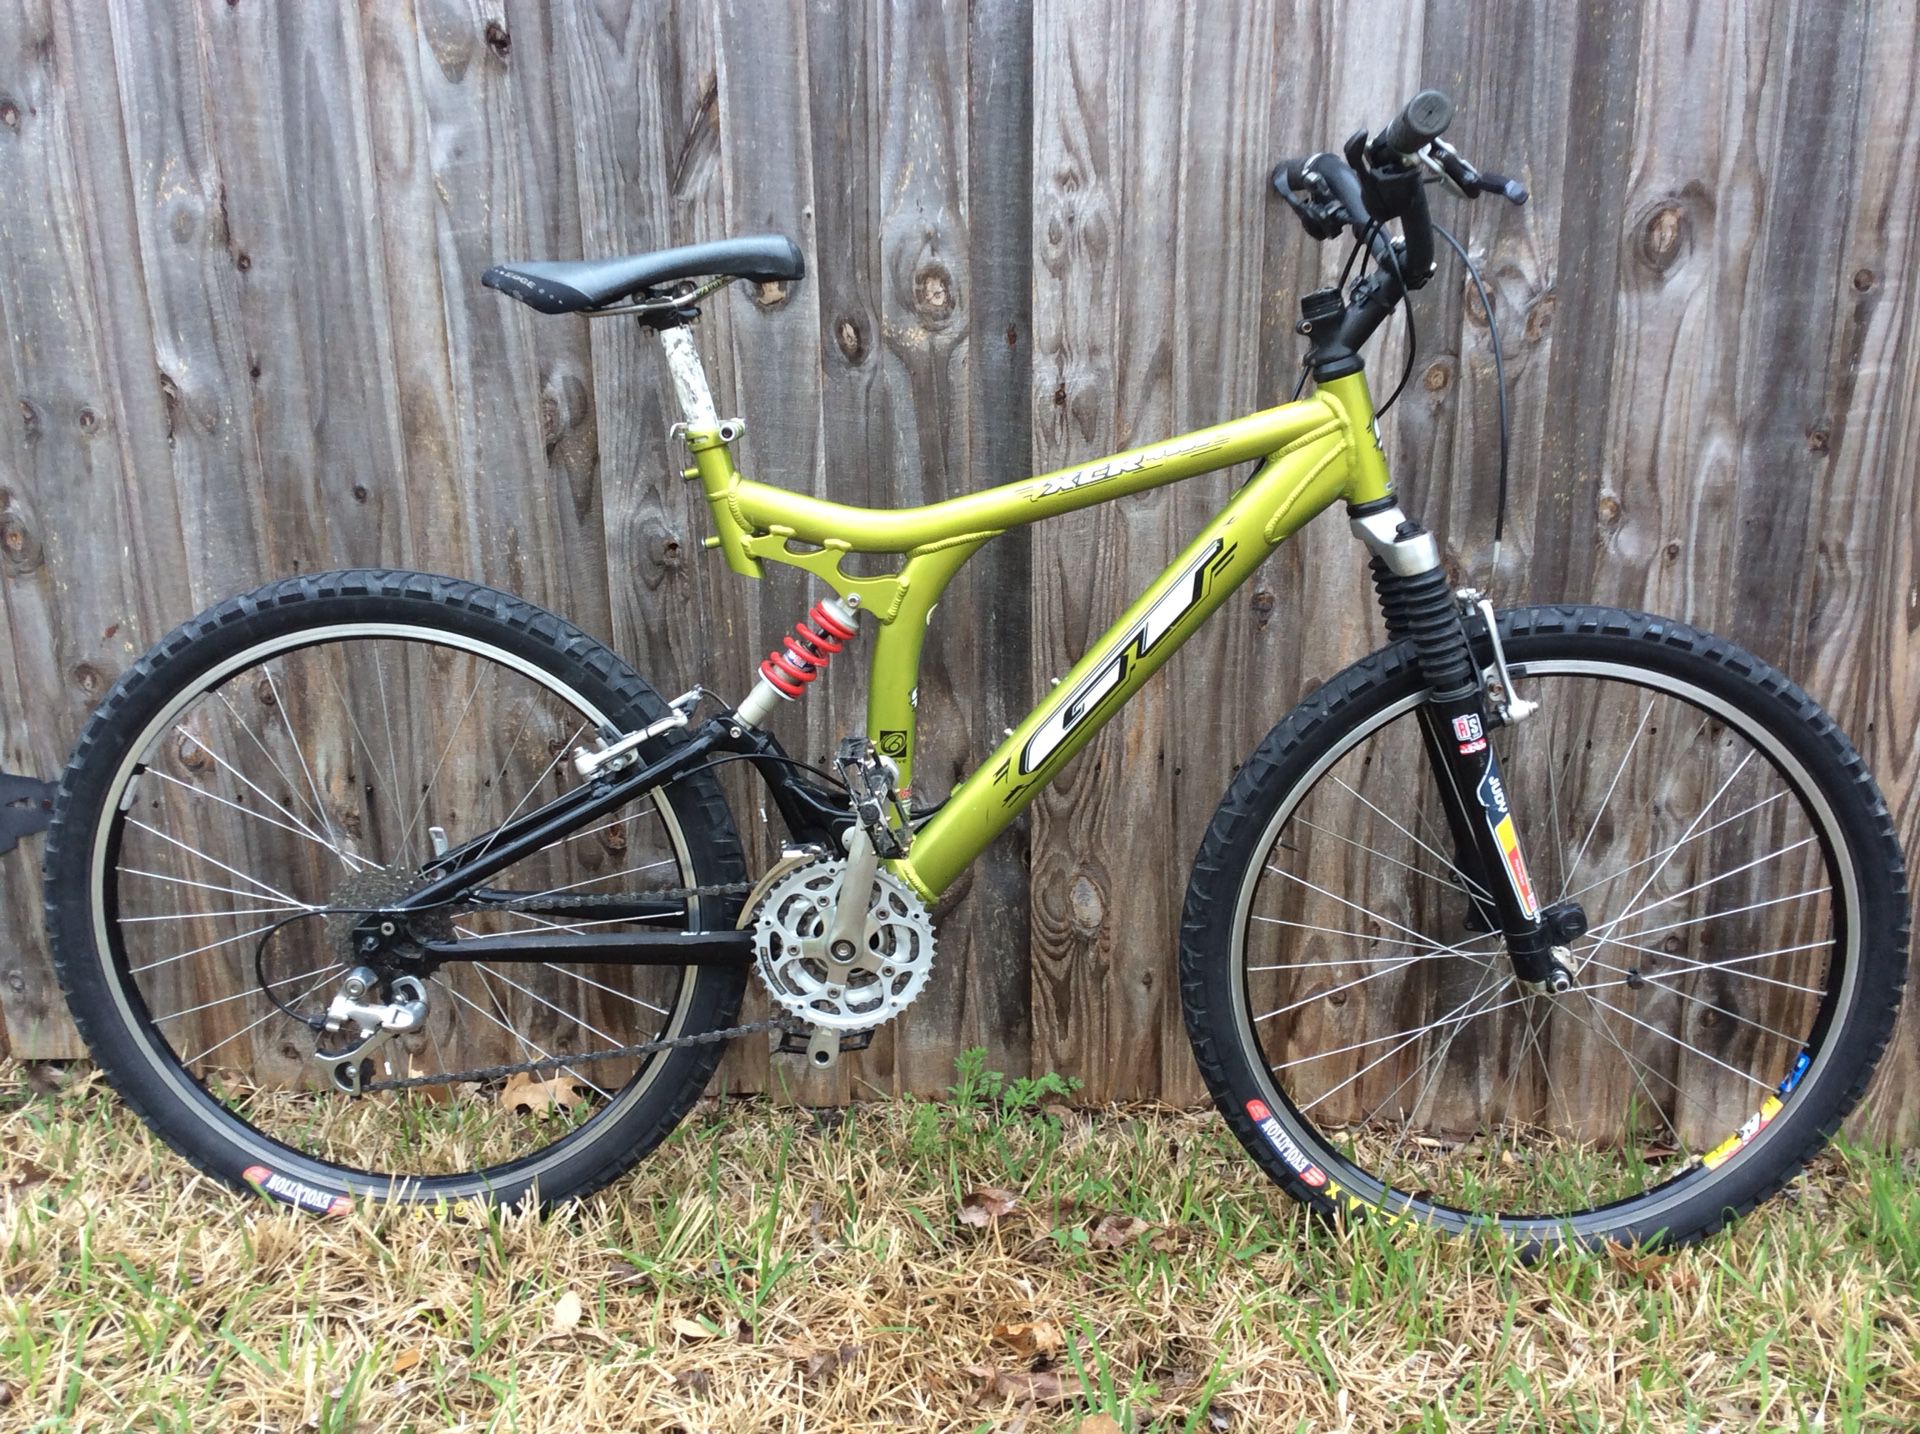 Gt Xcr 4000 Full Suspension Mountain Bike For Sale In Dallas Tx Offerup